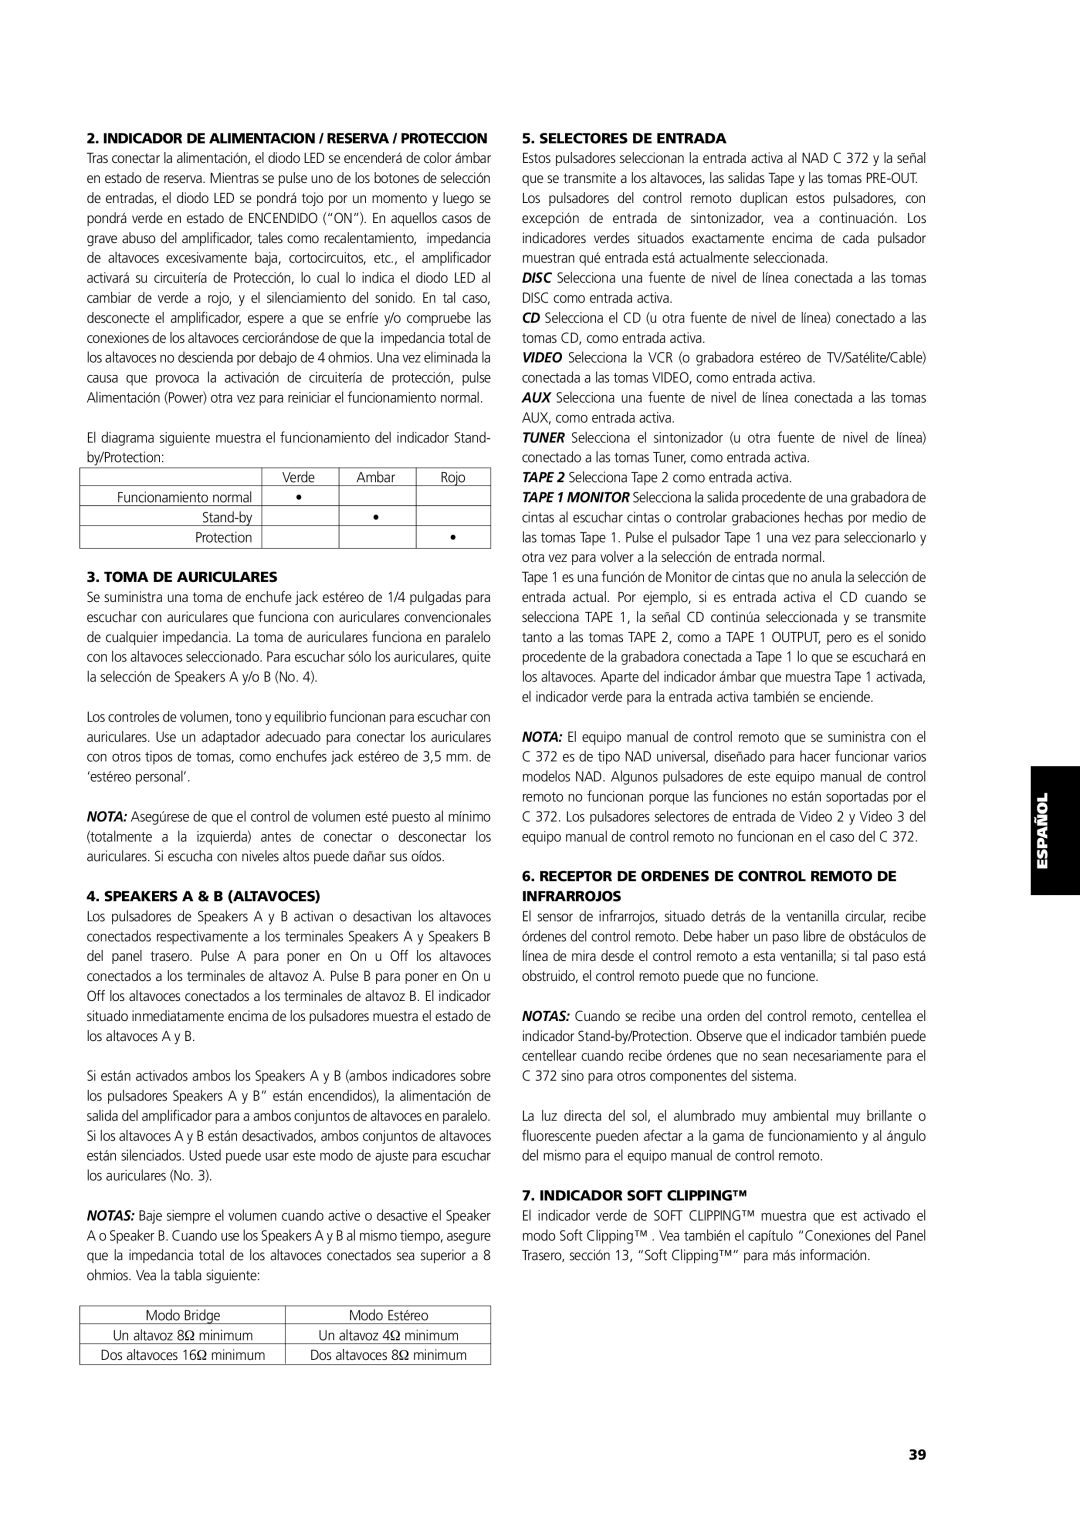 NAD C 372 owner manual Toma De Auriculares, Speakers A & B Altavoces, Selectores De Entrada, Indicador Soft Clipping 